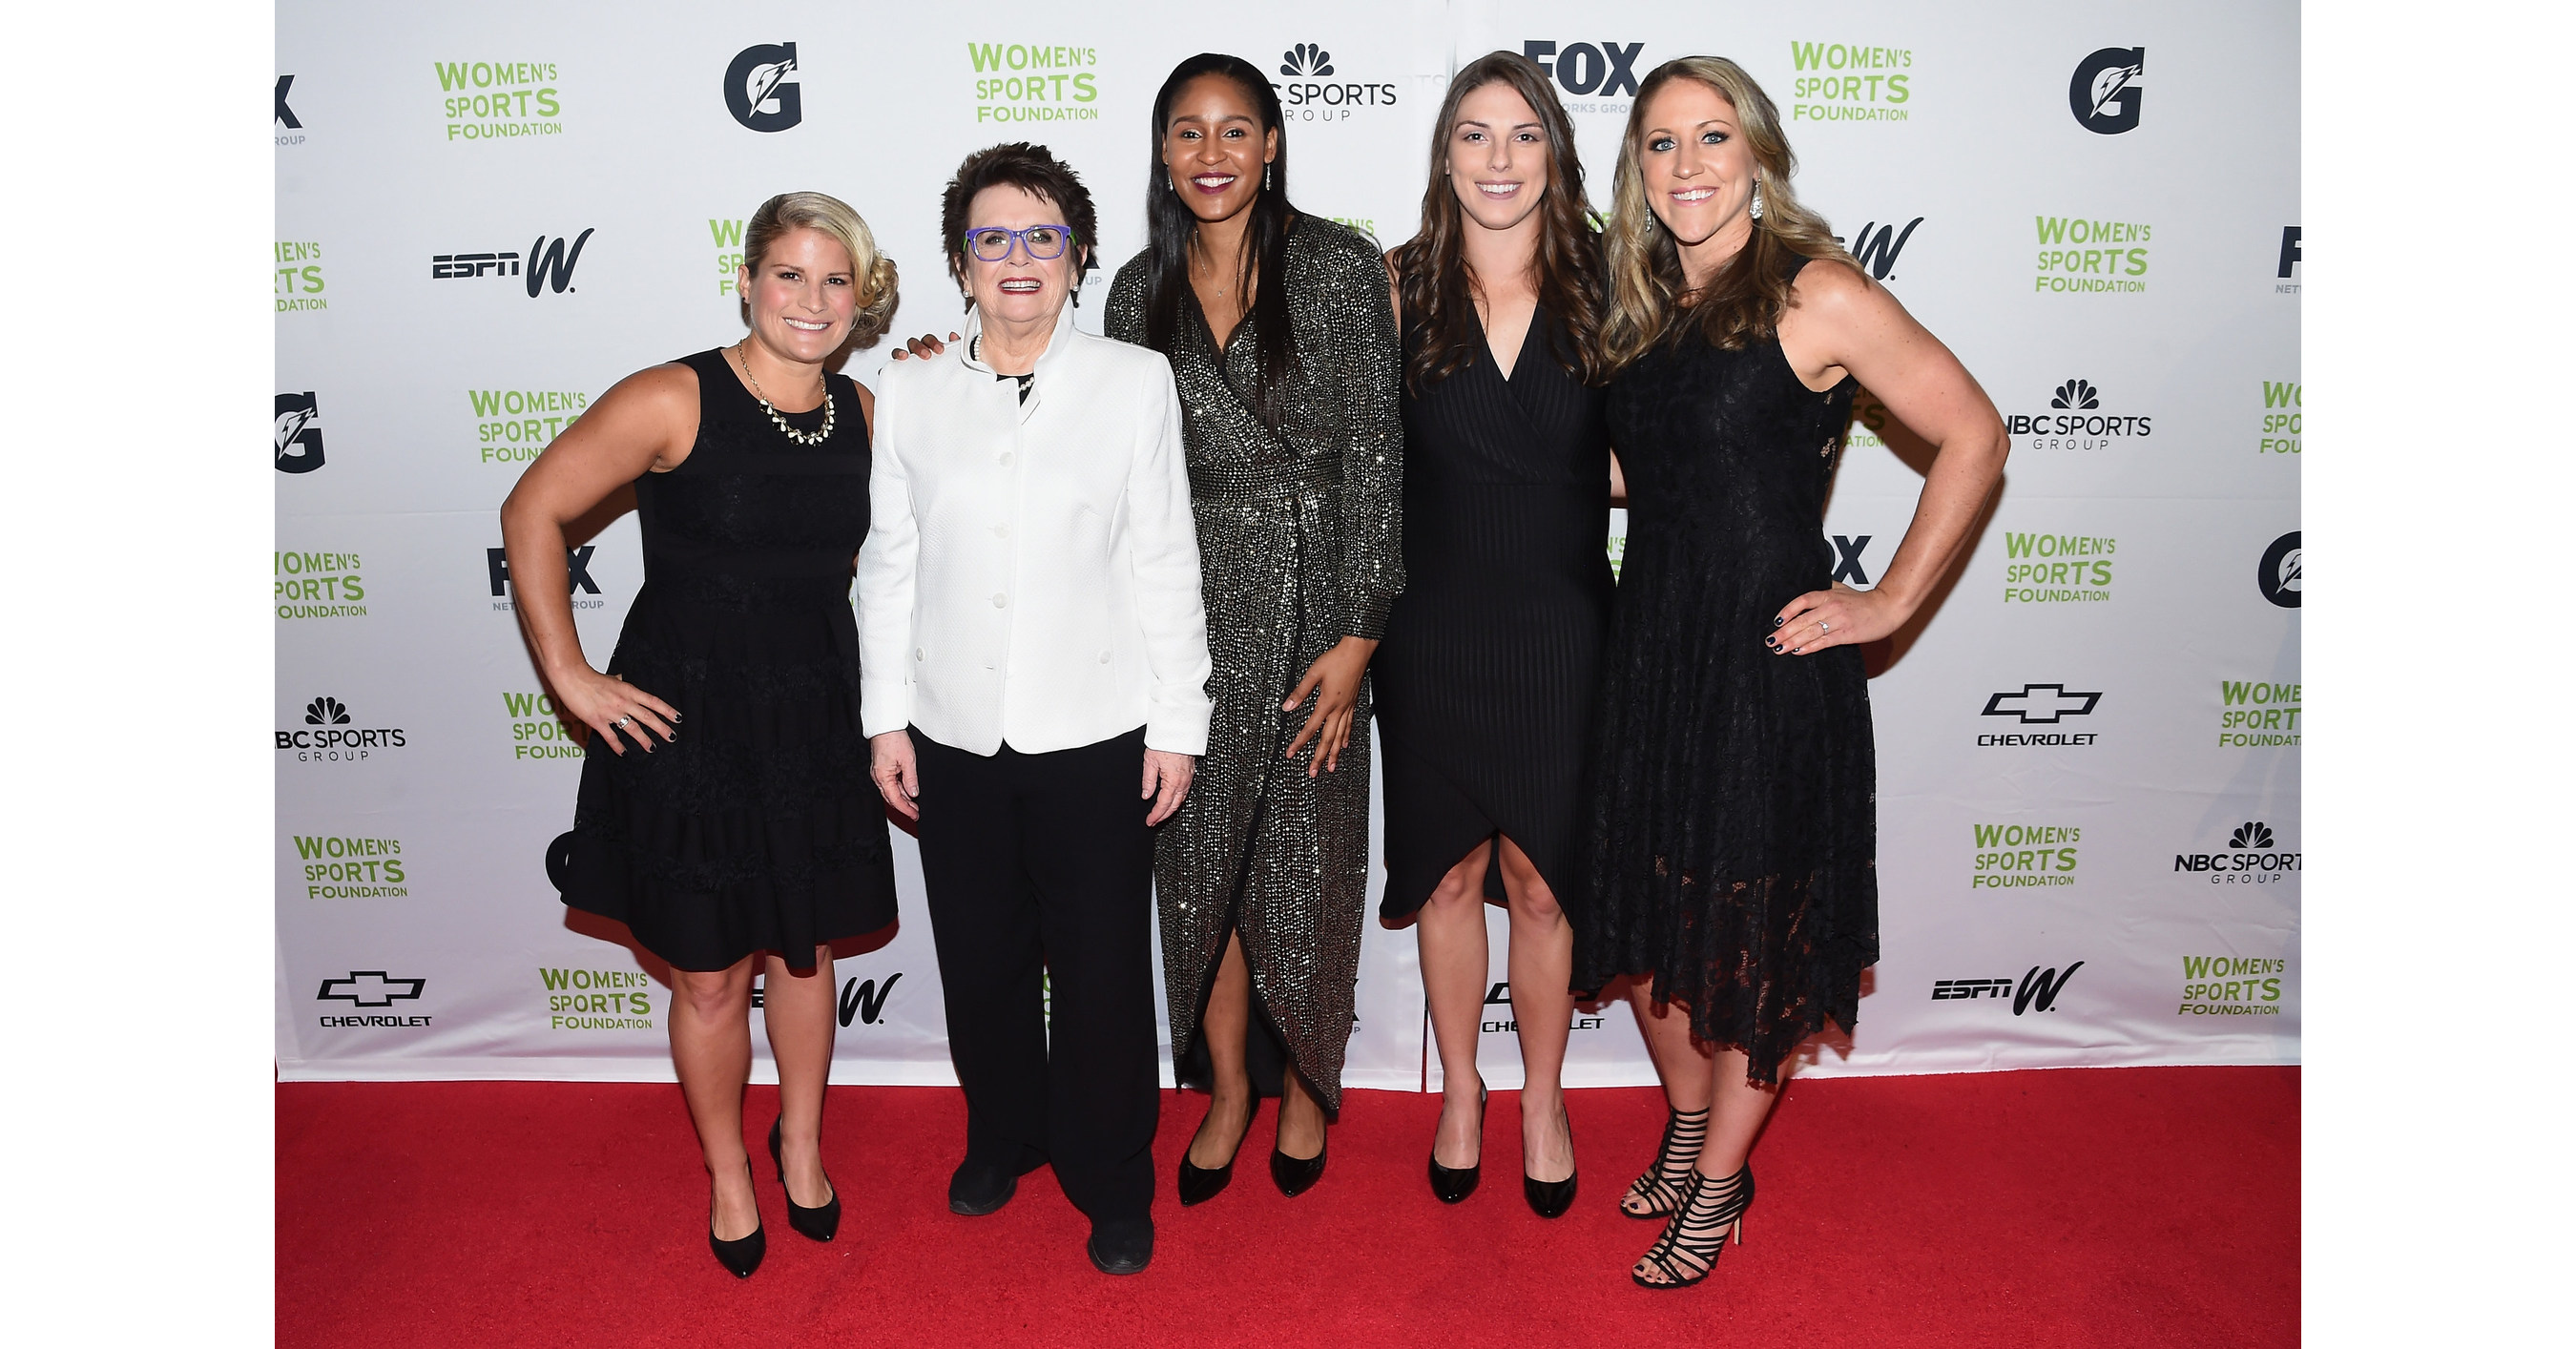 https://mma.prnewswire.com/media/586597/Annual_Salute_To_Women_in_Sports_Awards_Gala.jpg?p=facebook